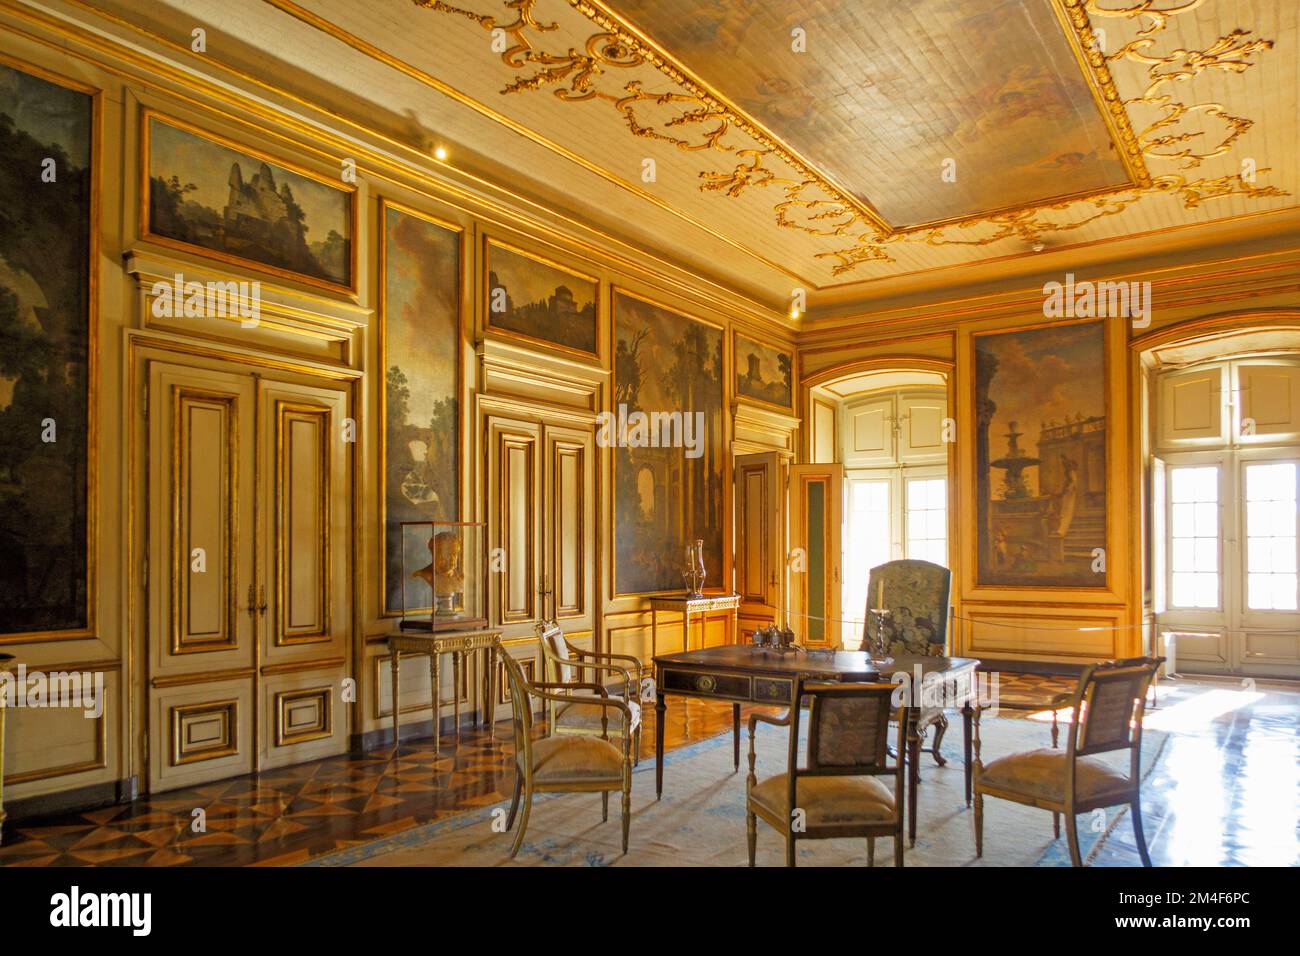 Interiorof the 18th century Palace of Queluz - Palácio Nacional de Queluz - Portugal, Europe Stock Photo